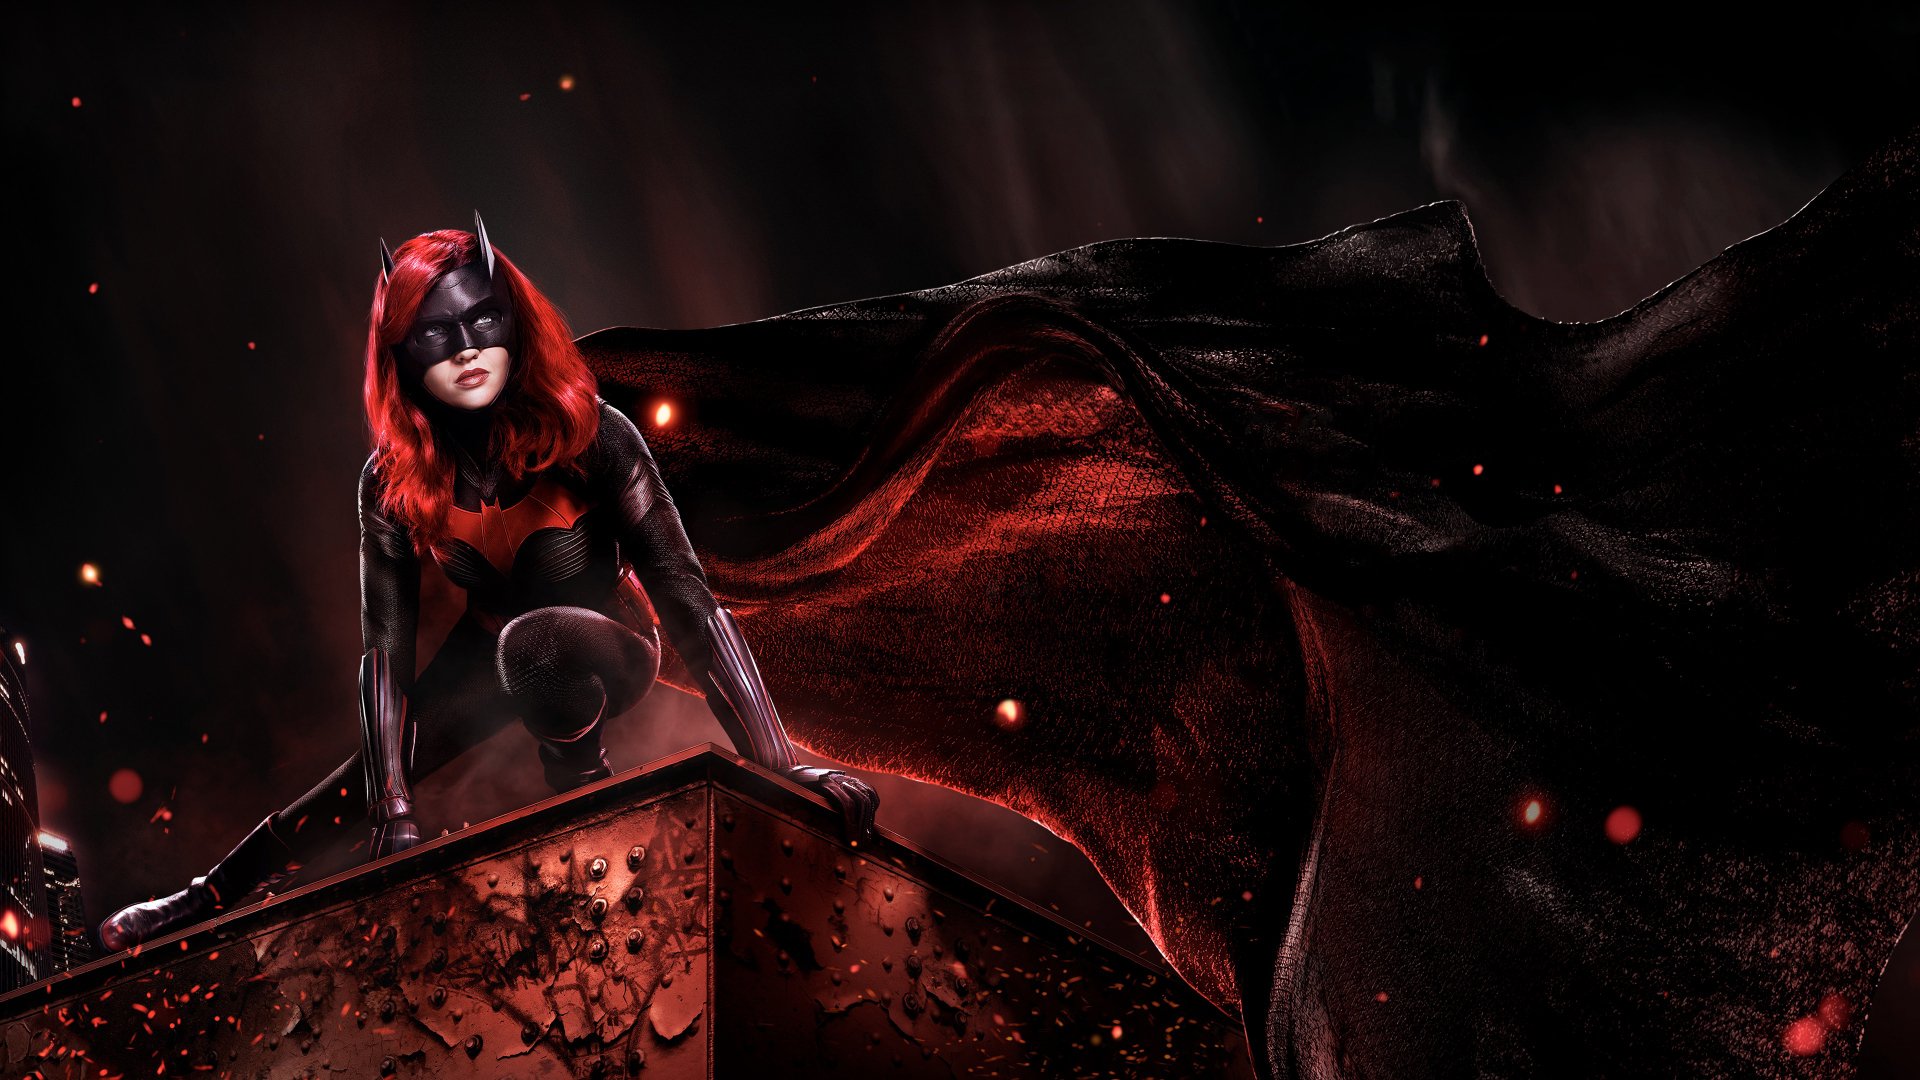 Download Ruby Rose Tv Show Batwoman 4k Ultra Hd Wallpaper 5866